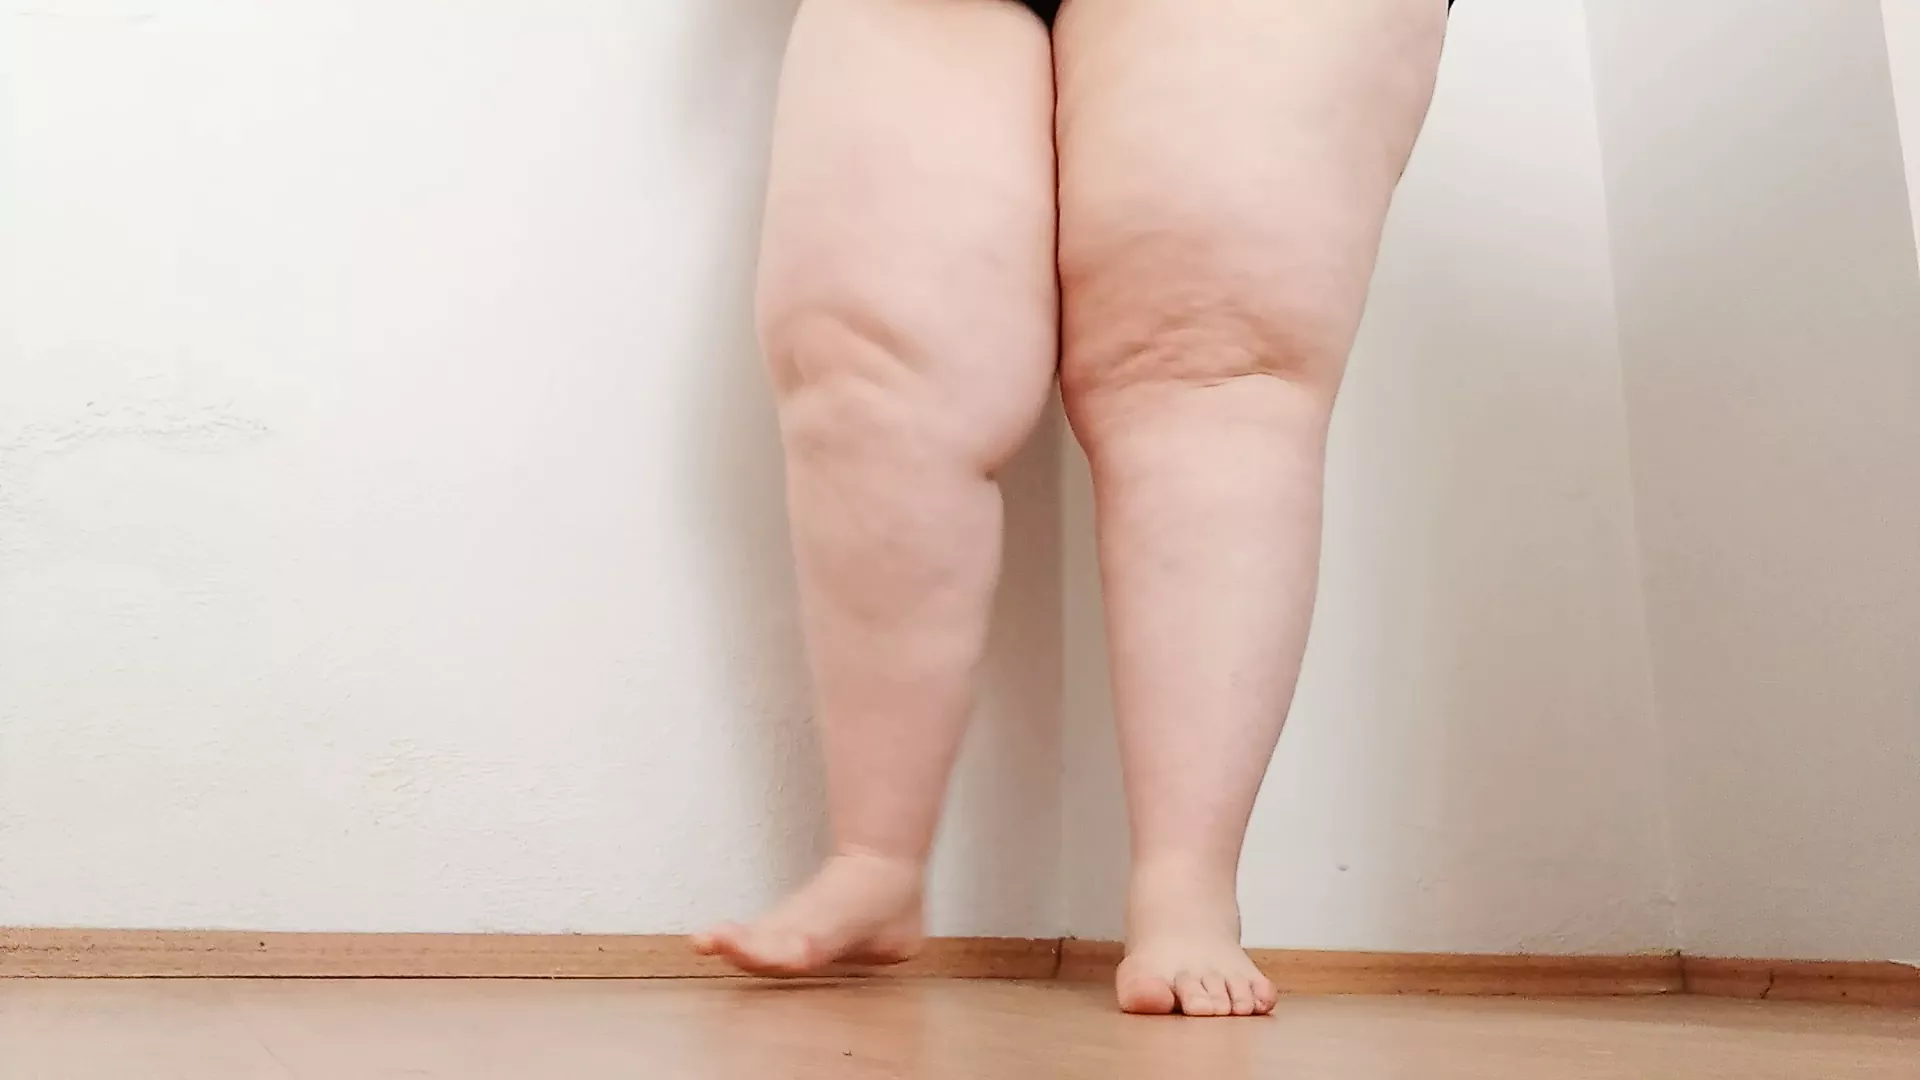 Ssbbw thick fat and cellulite legs picture picture photo